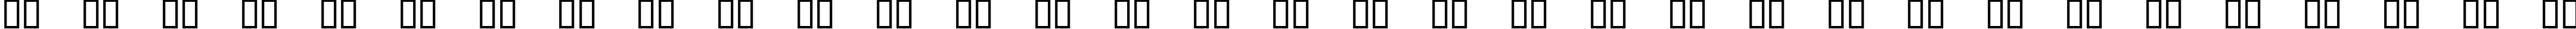 Пример написания русского алфавита шрифтом Wingdings